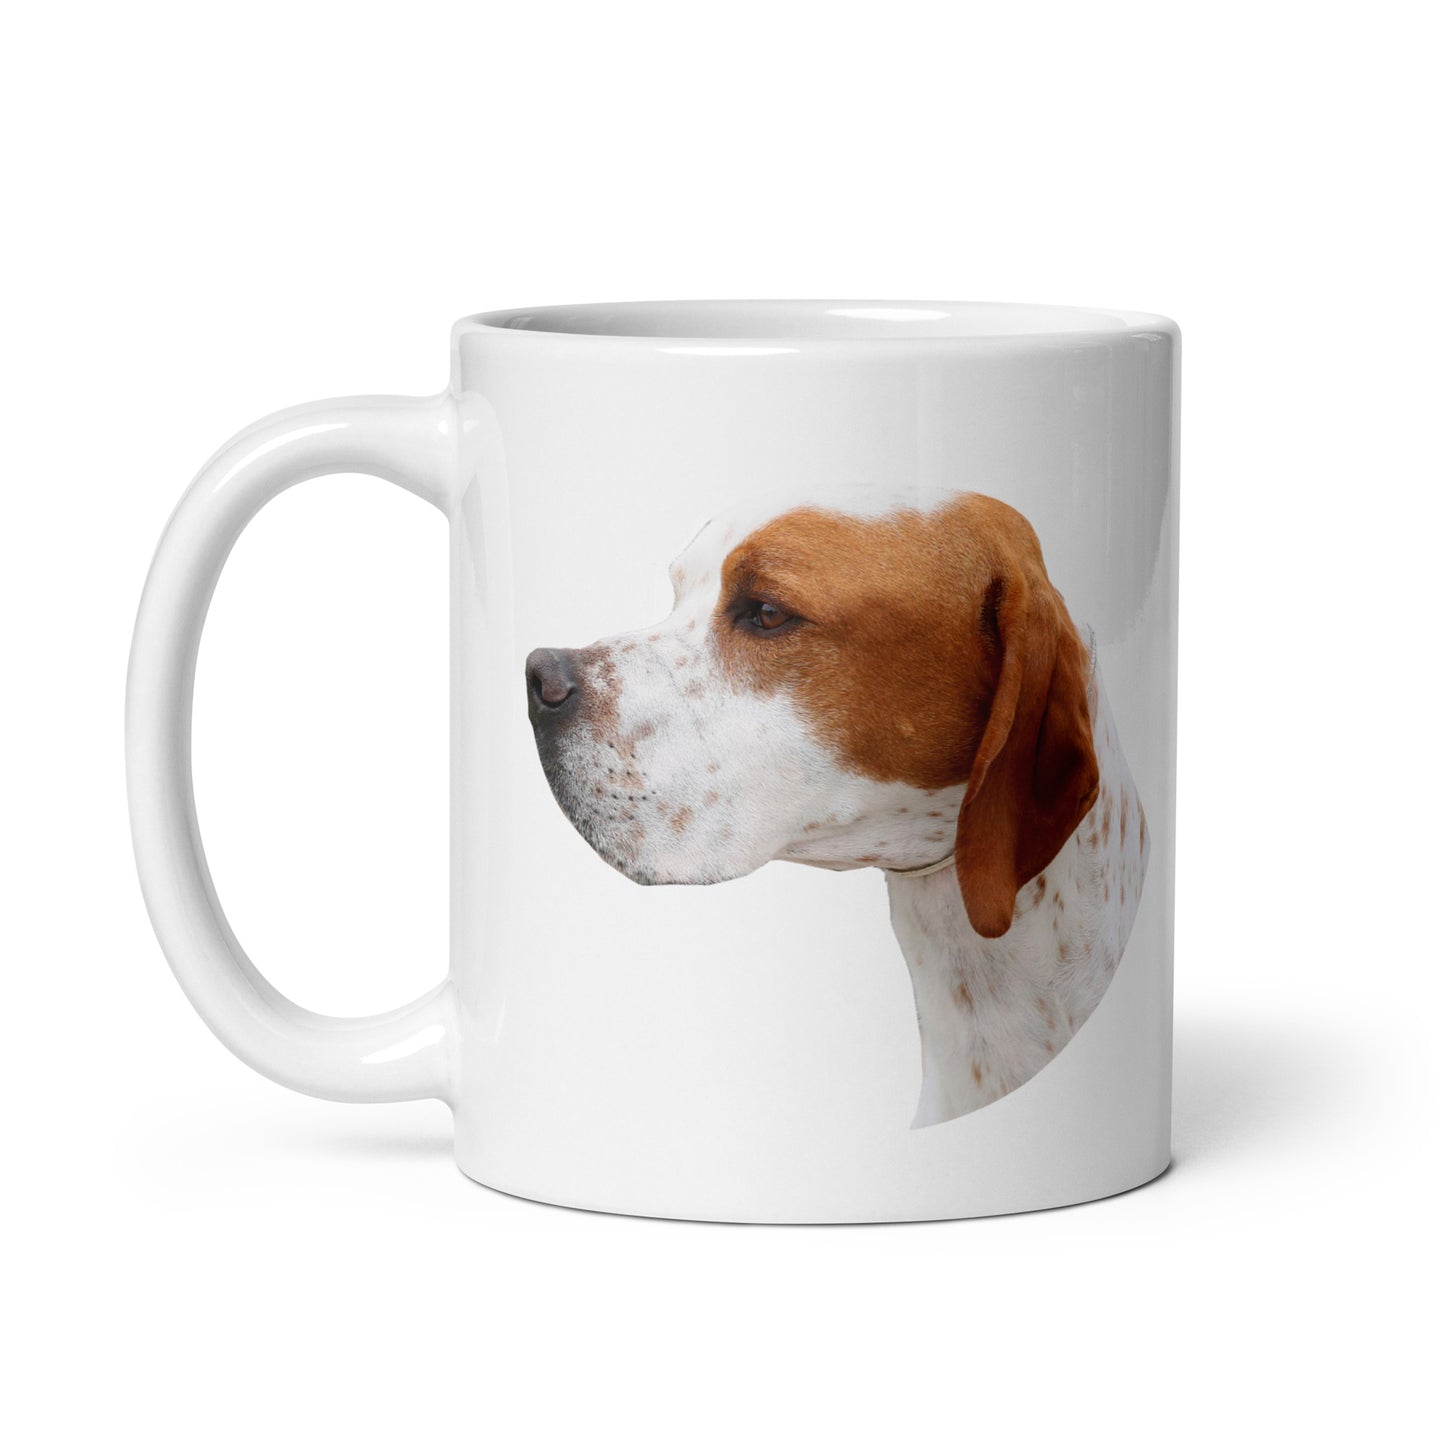 Glossy Mug Printed with a Pointer Dog